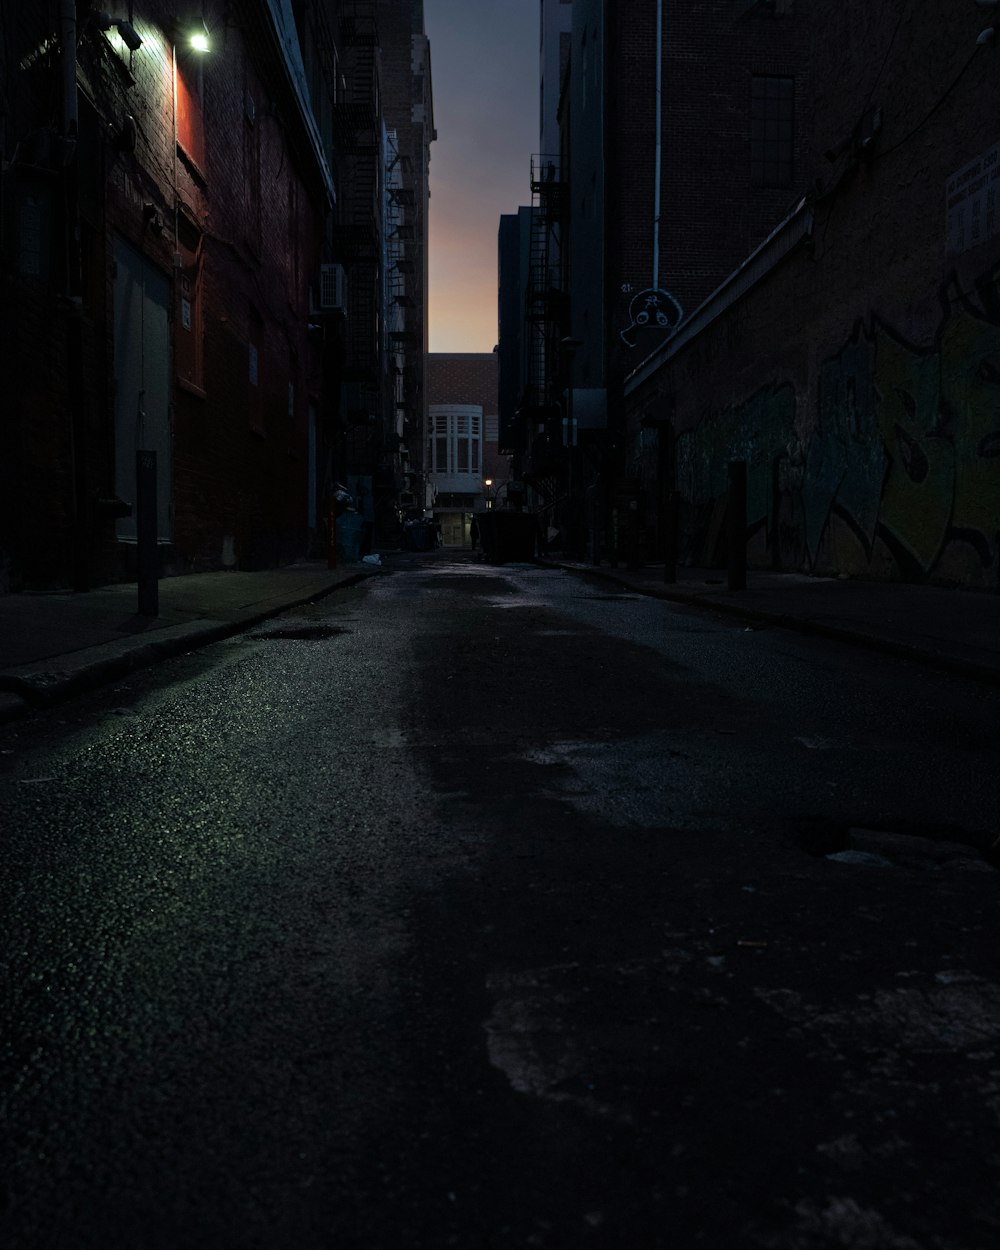 a dark city street at night